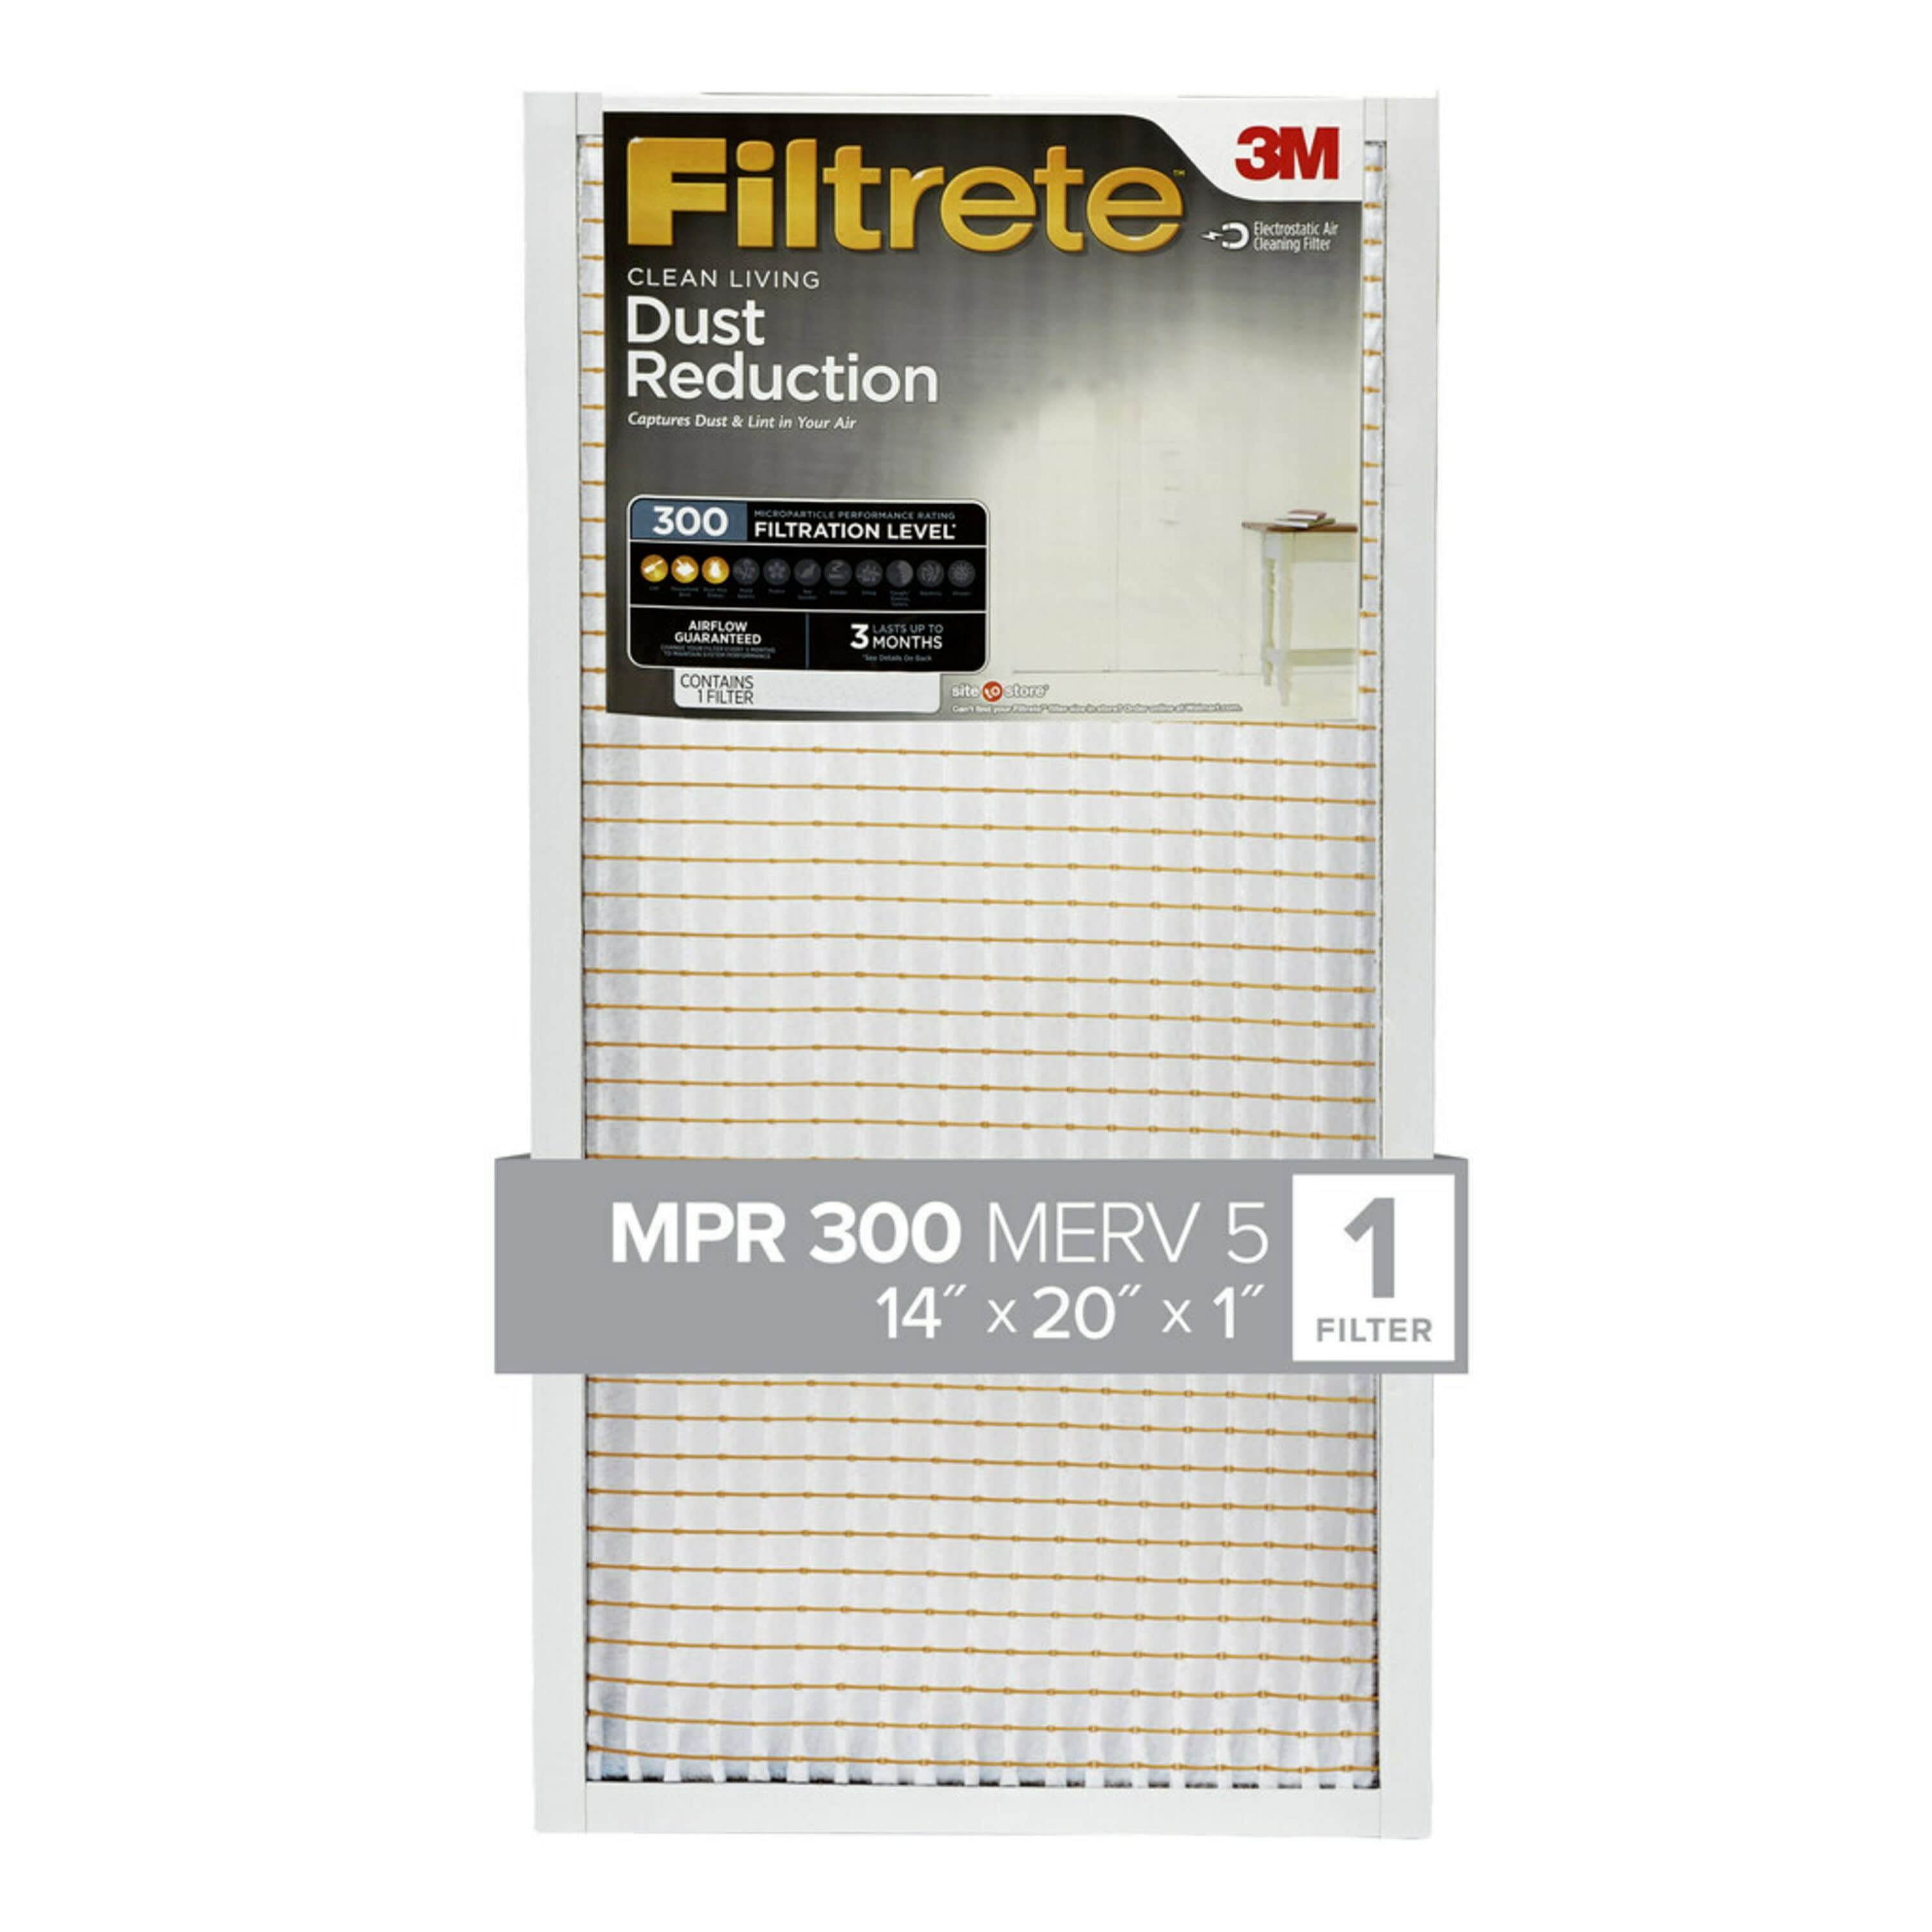 by 3m 126890 x6 MERV 11 Filtrete Air Filter BOX OF 6 = 12x20x1 